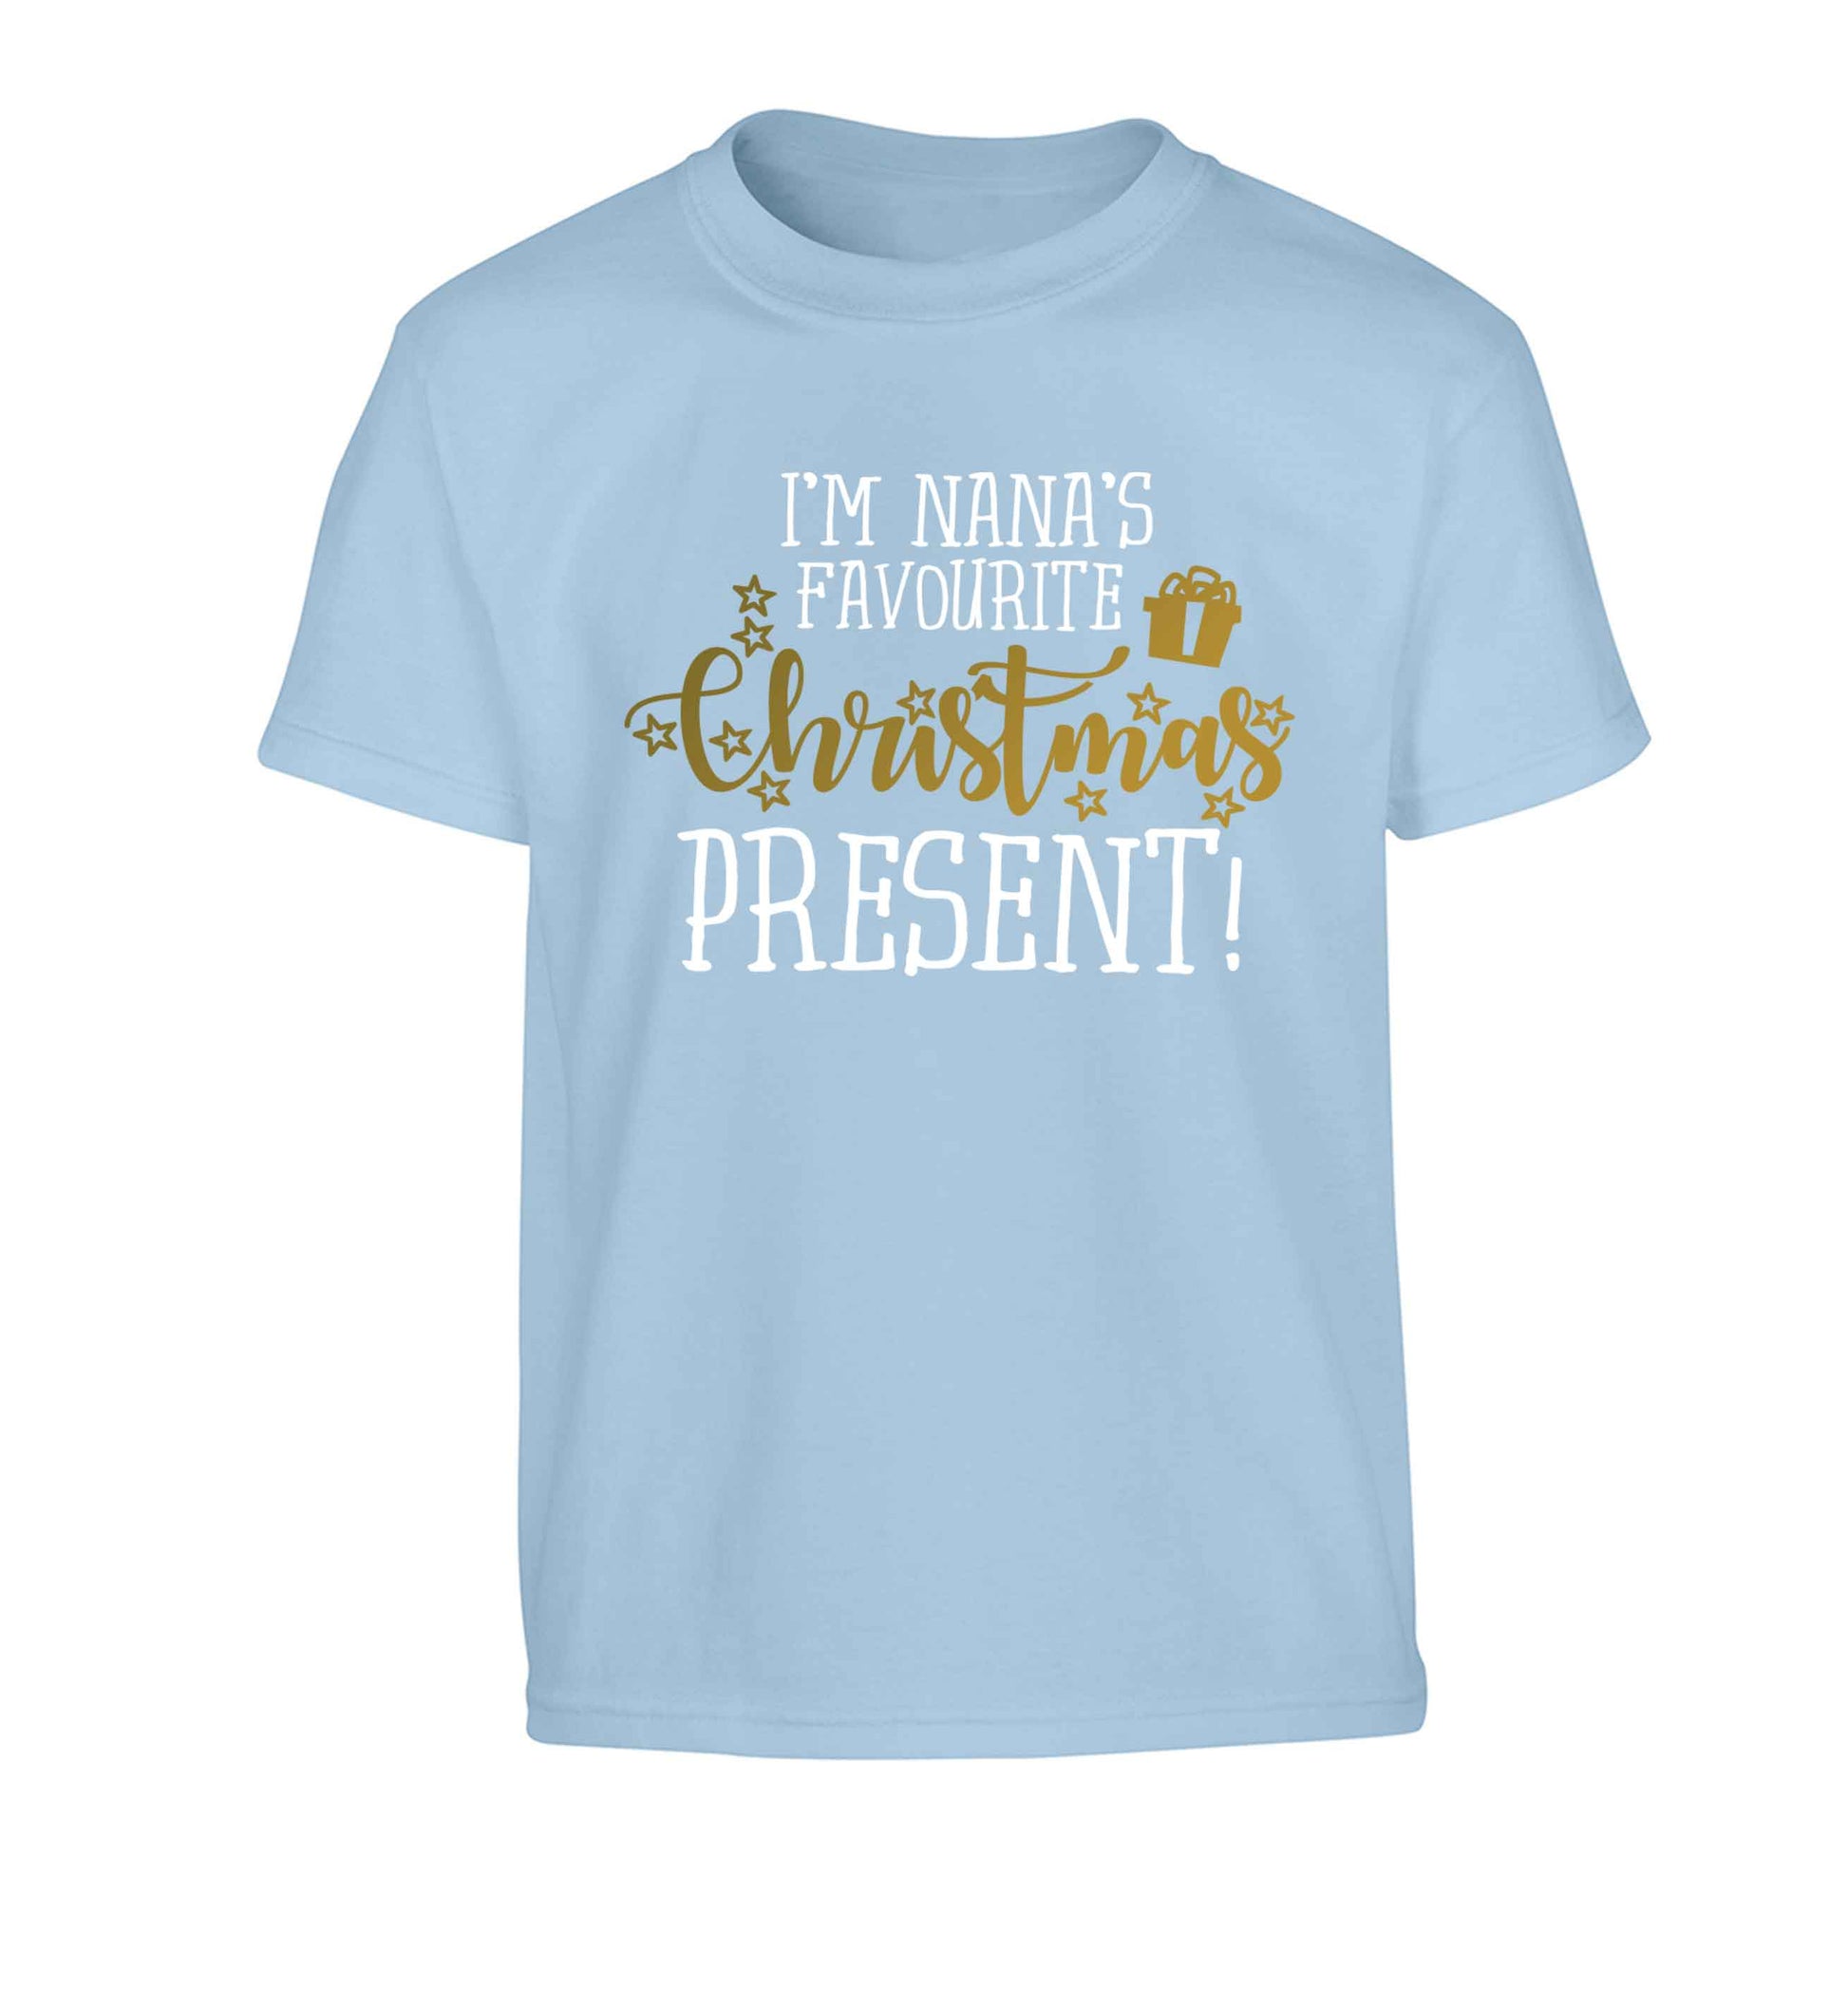 Nana's favourite Christmas present Children's light blue Tshirt 12-13 Years